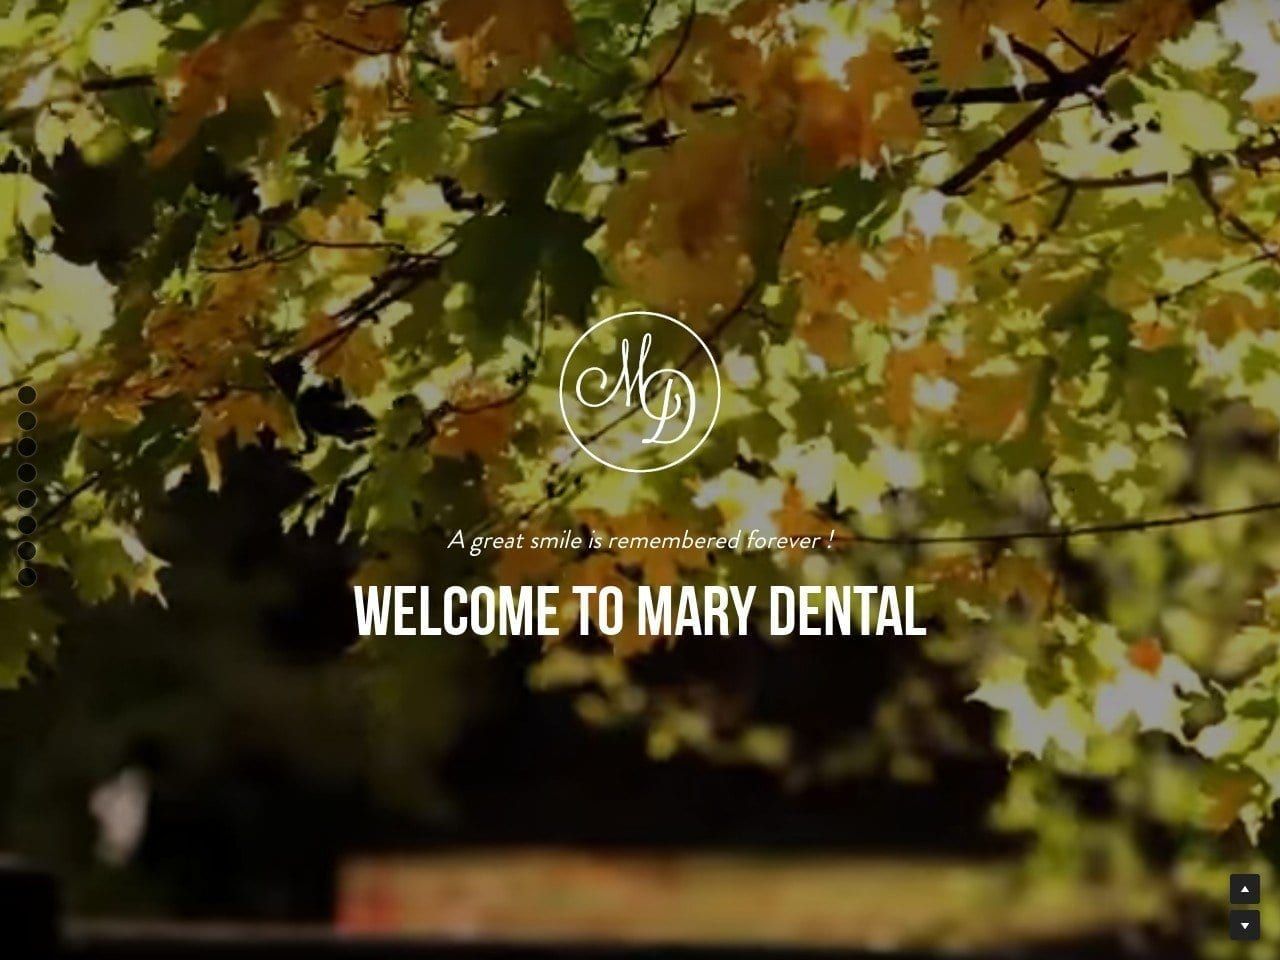 Mary Dental Website Screenshot from marydental.com